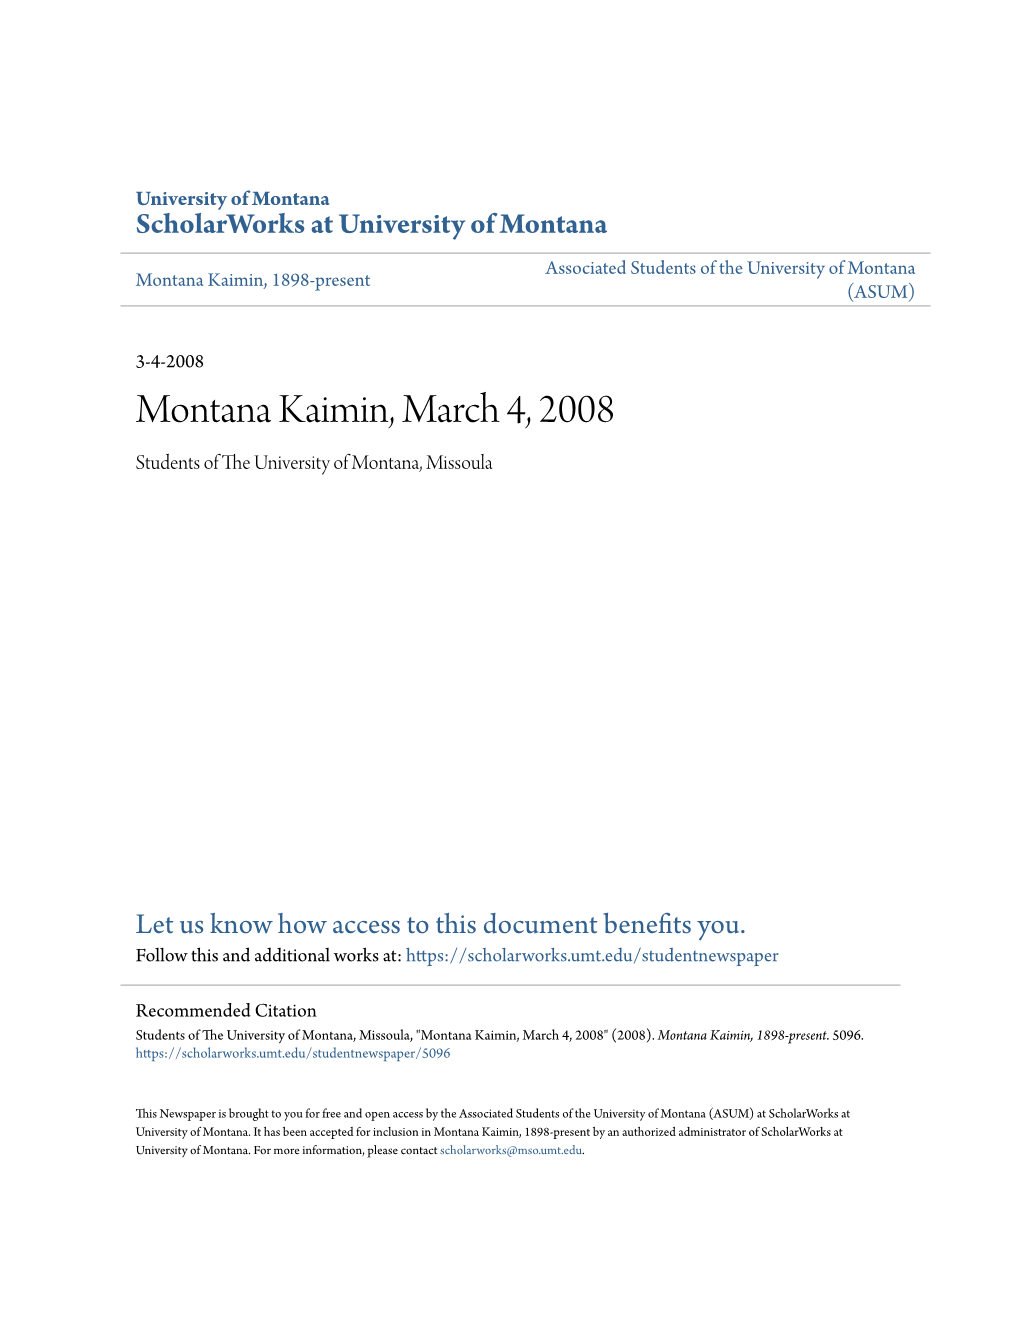 Montana Kaimin, March 4, 2008 Students of the Niu Versity of Montana, Missoula